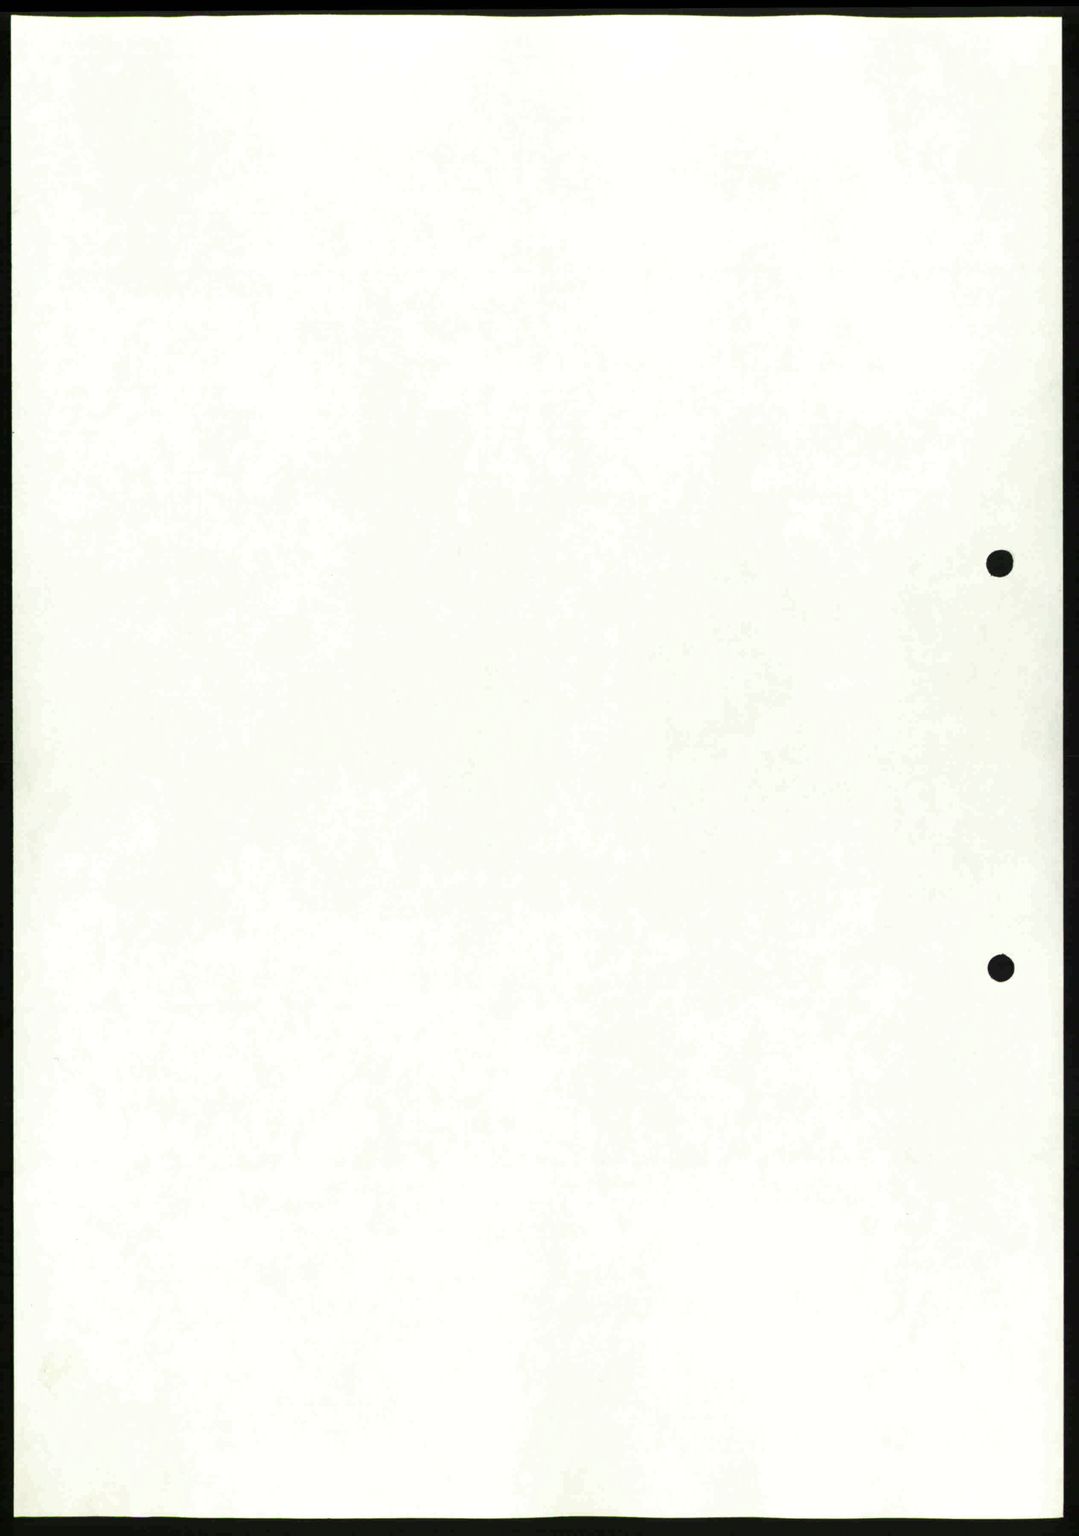 Moss sorenskriveri, SAO/A-10168: Pantebok nr. B7, 1939-1939